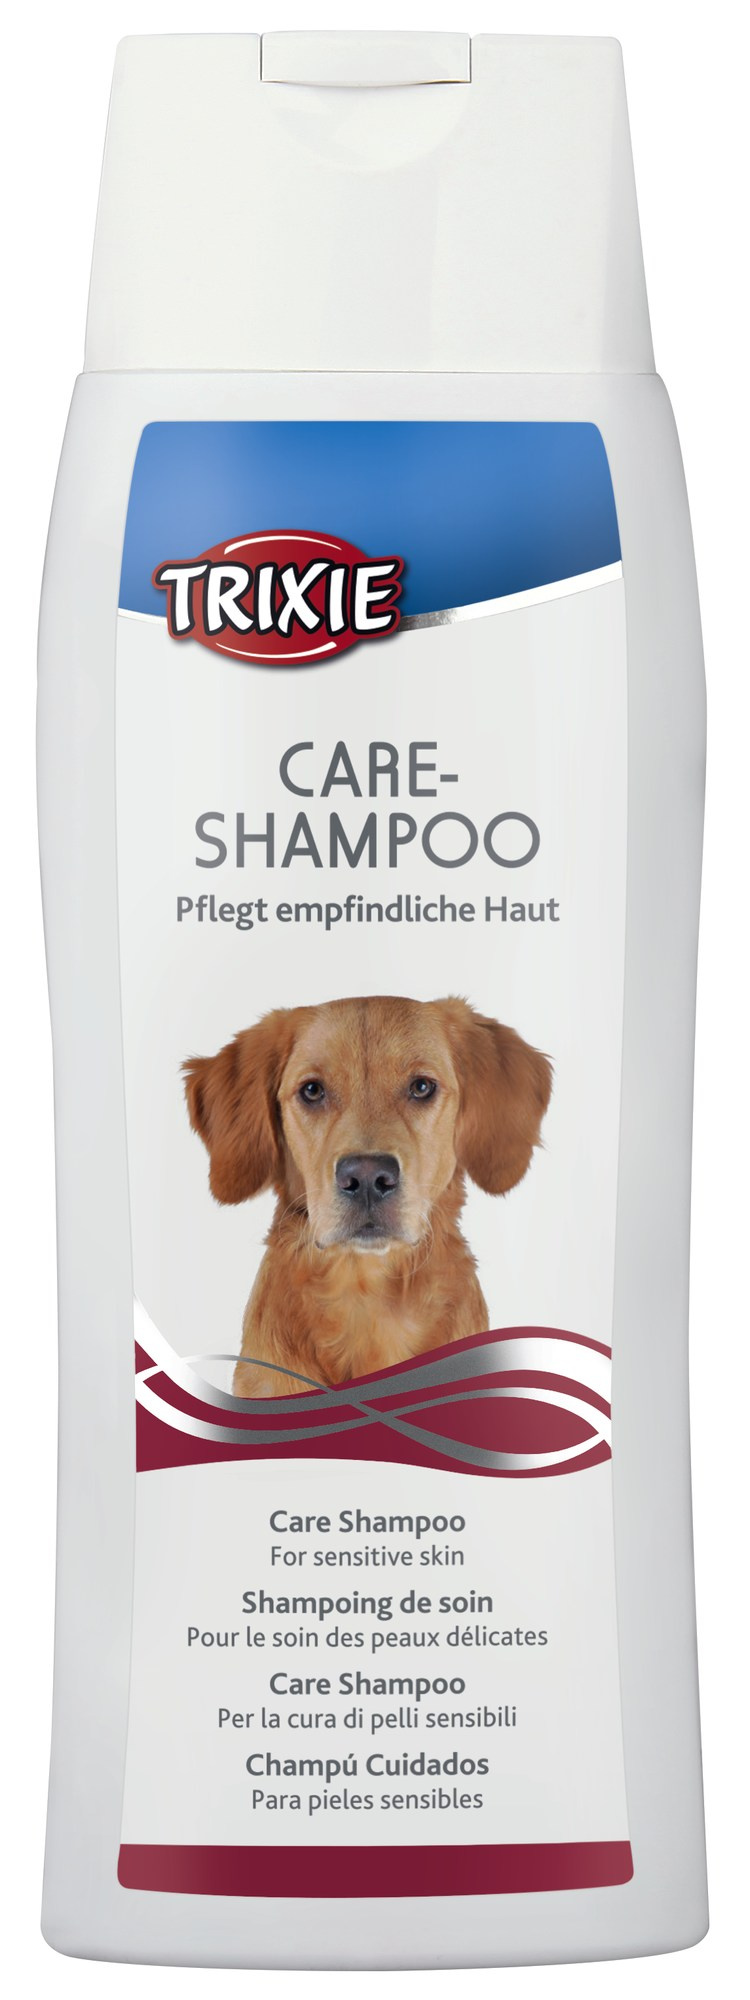 Care-Shampoo